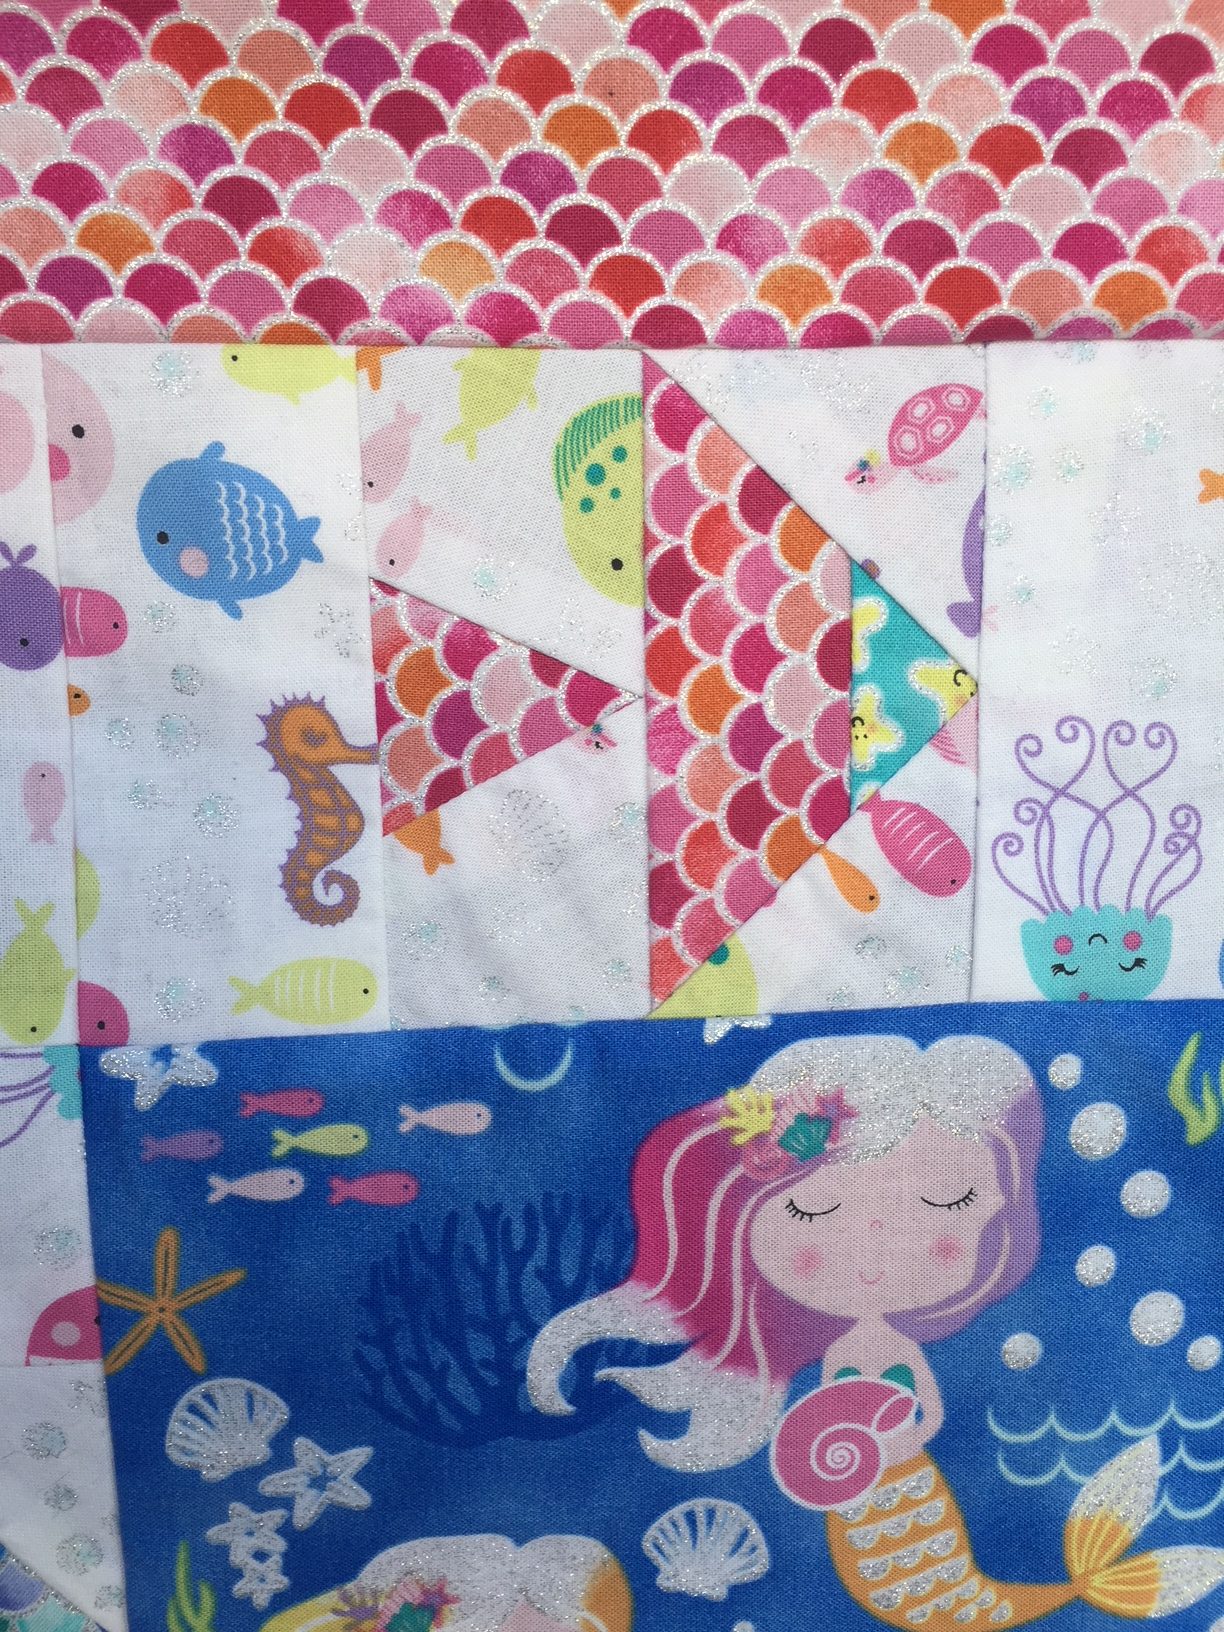 Mermaid Wishes quilt top con telas con purpurina de Northcott patchwork